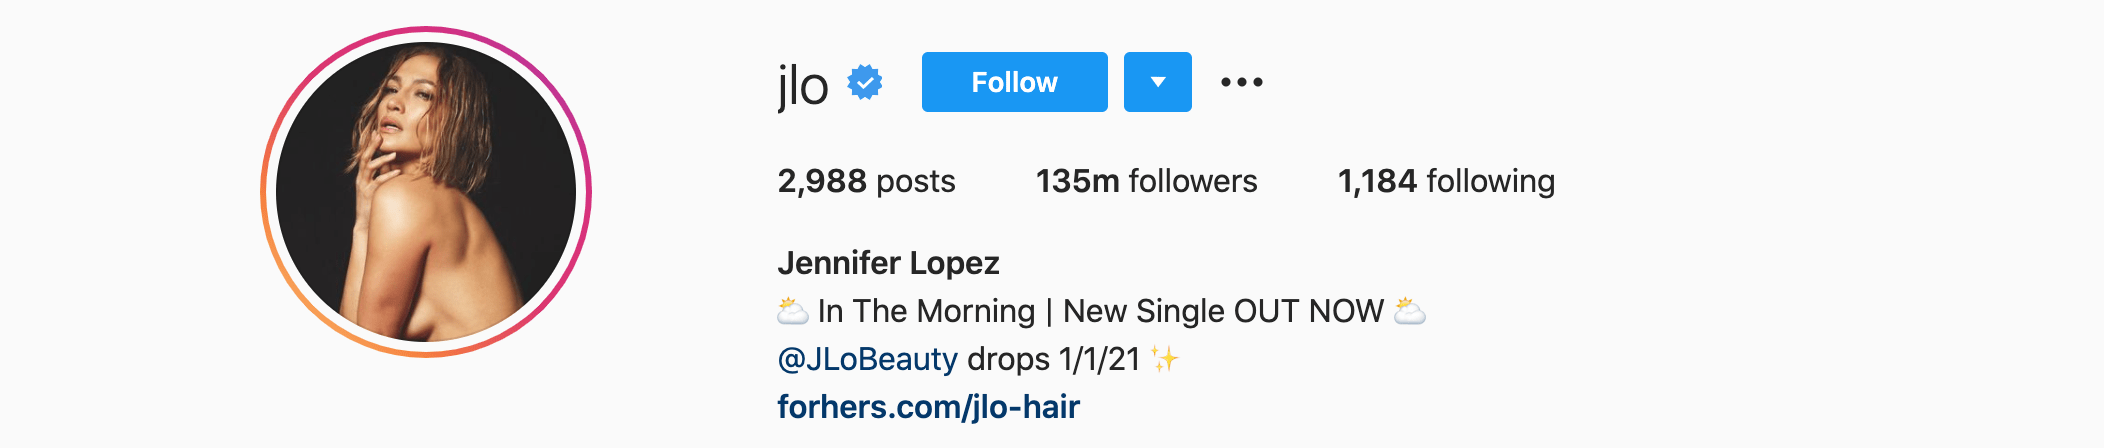 Top Instagram Influencers - JENNIFER LOPEZ